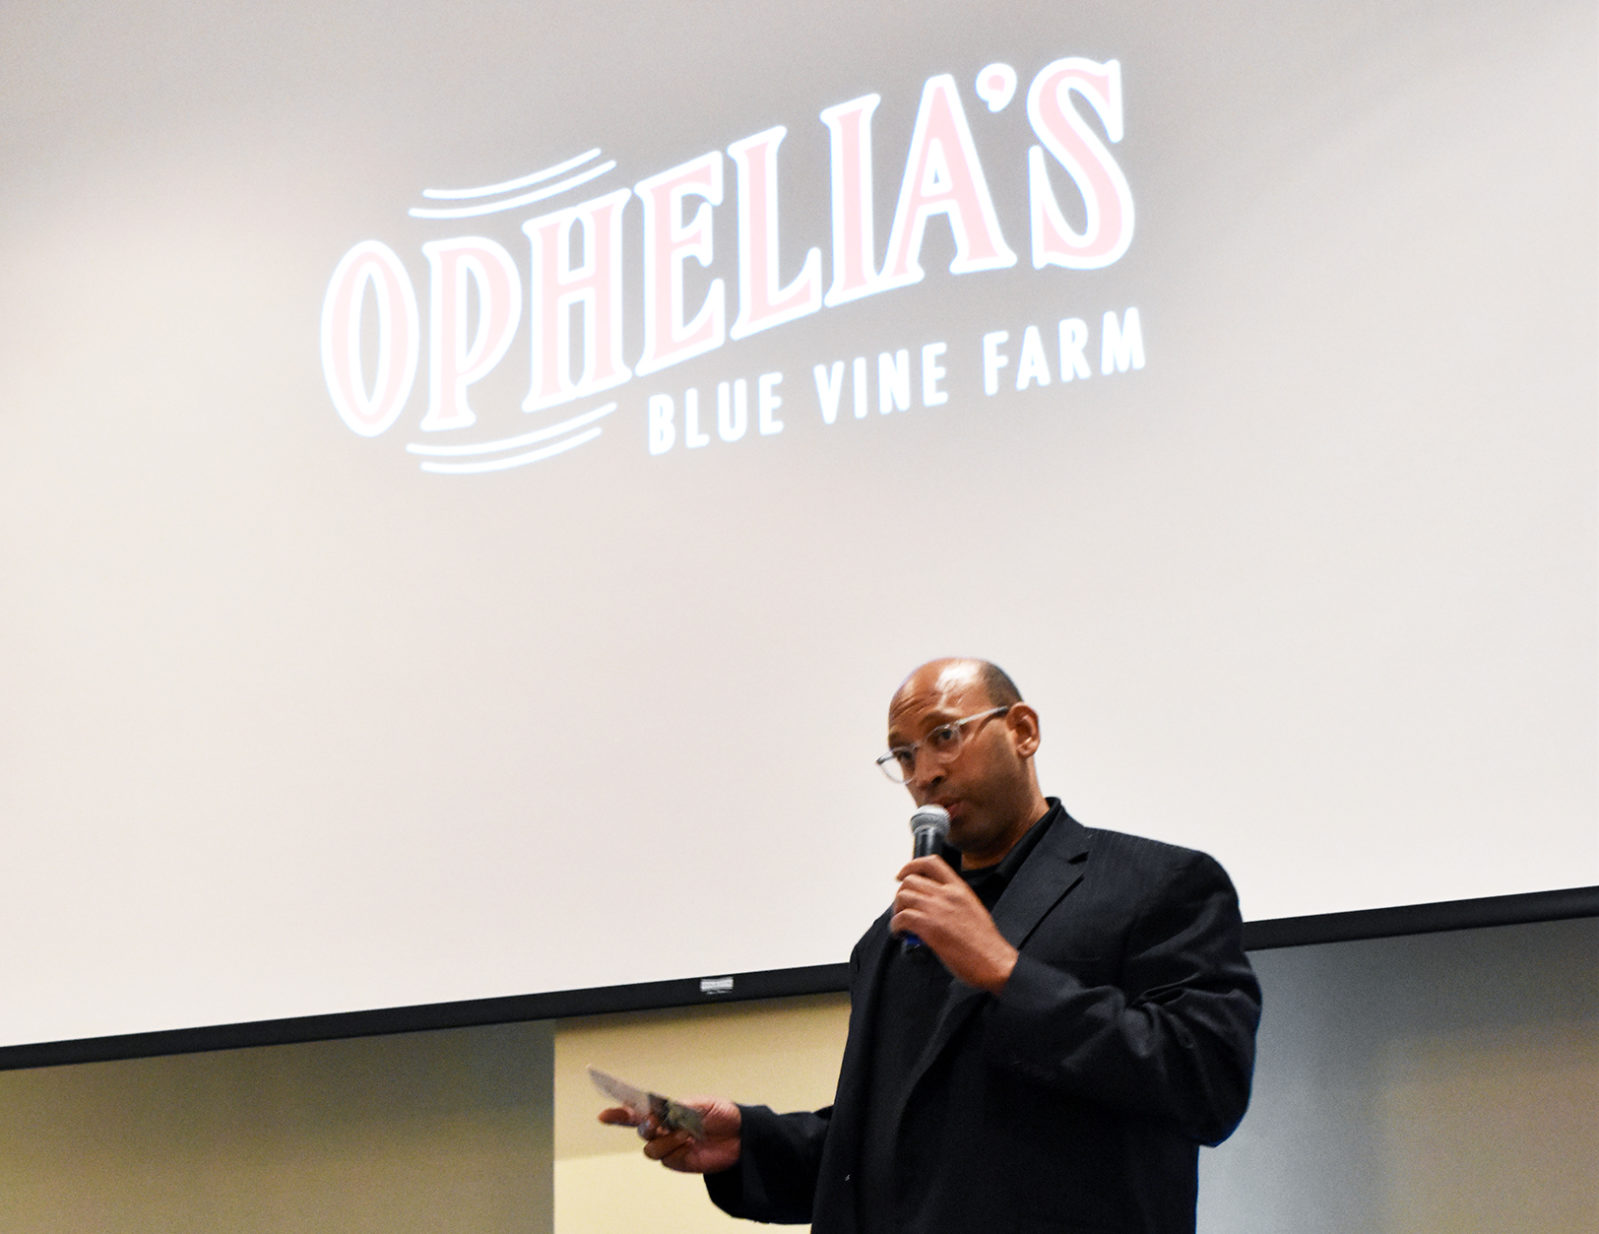 Hy-Vee OpportUNITY Ophelia's Blue Vine Farm